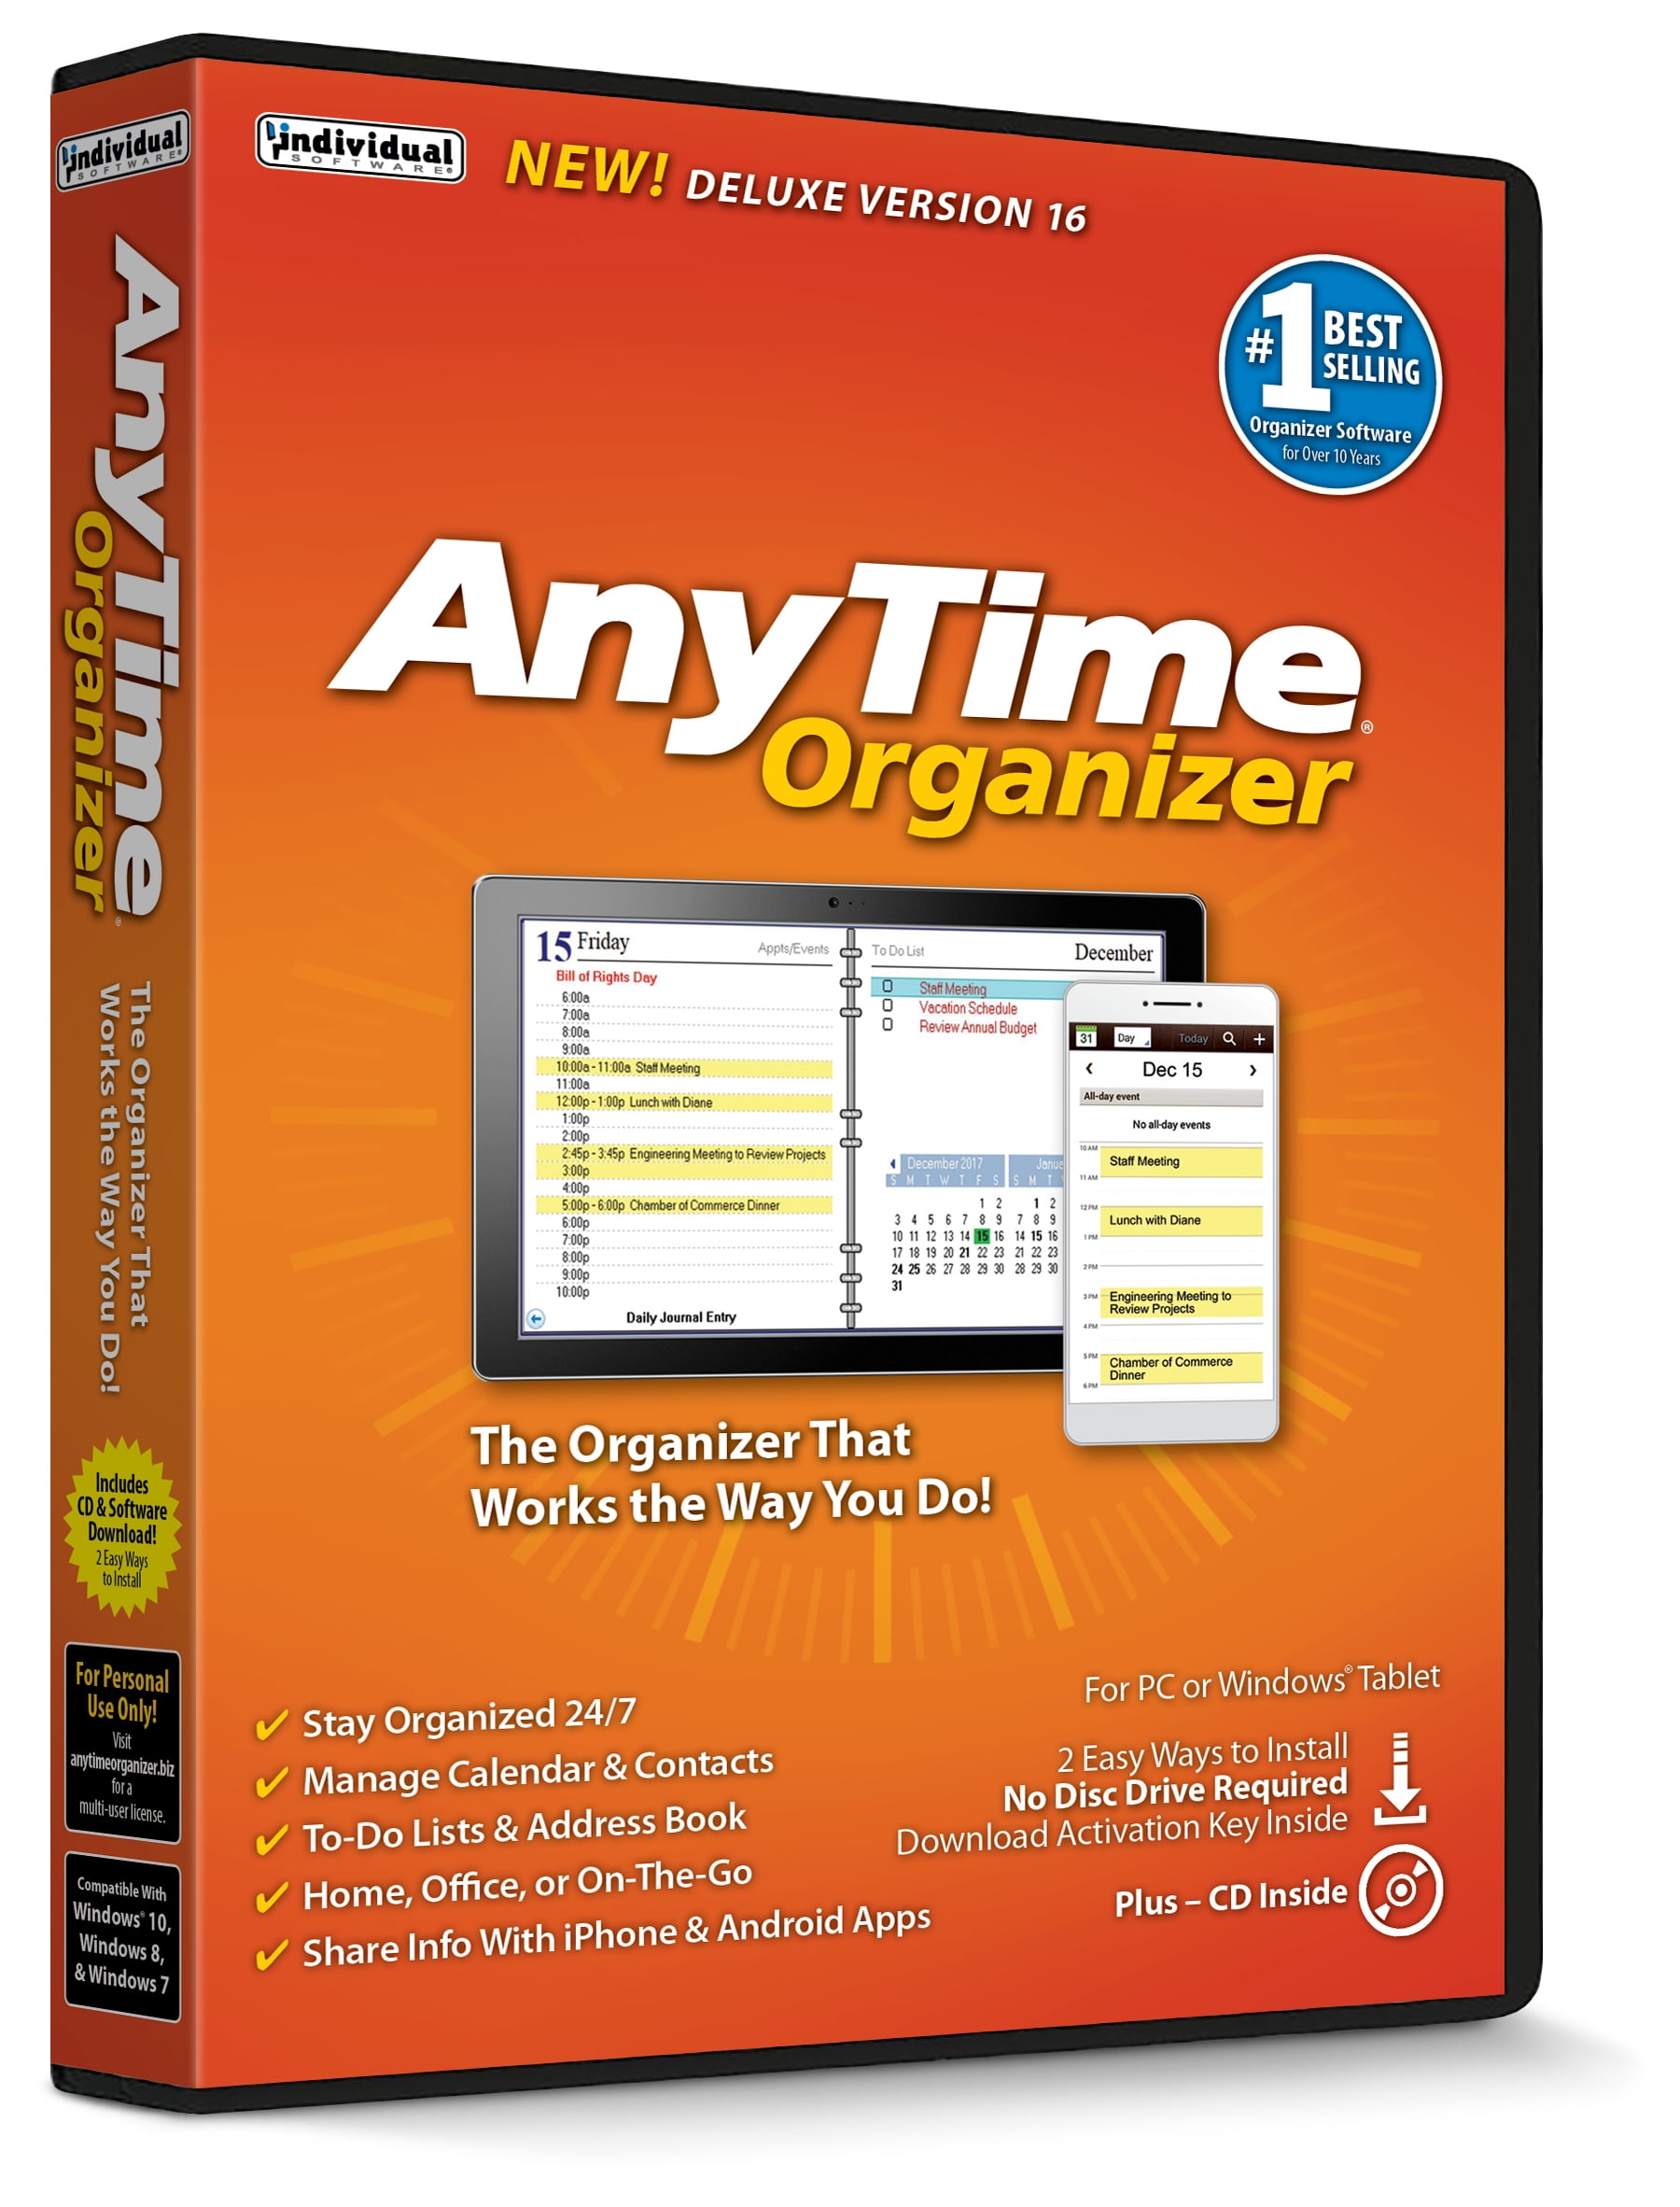 anytime organizer will not start